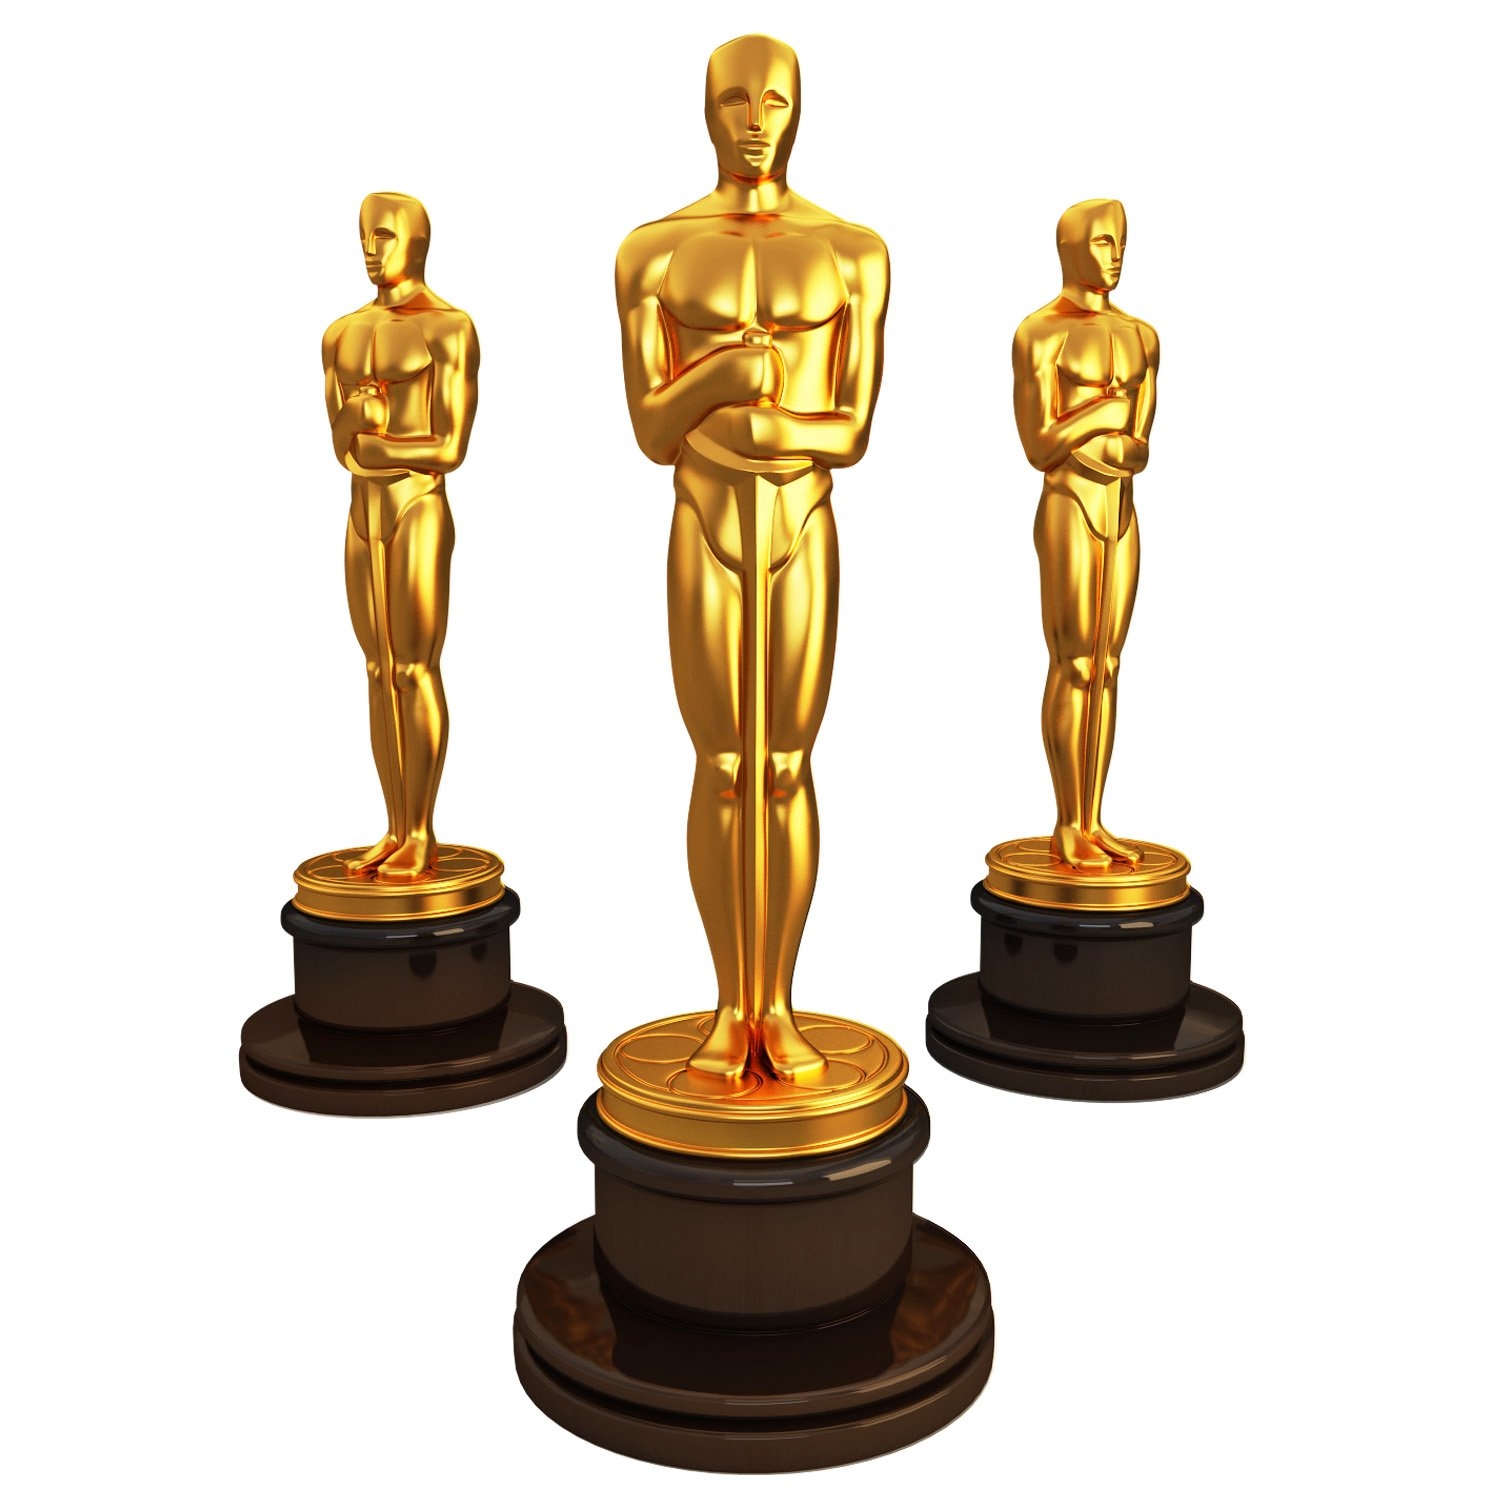 3d model Oscar statuette. Статуэтка Оскар 3д. Золотая статуя Оскар. Оскар кинонаграда.